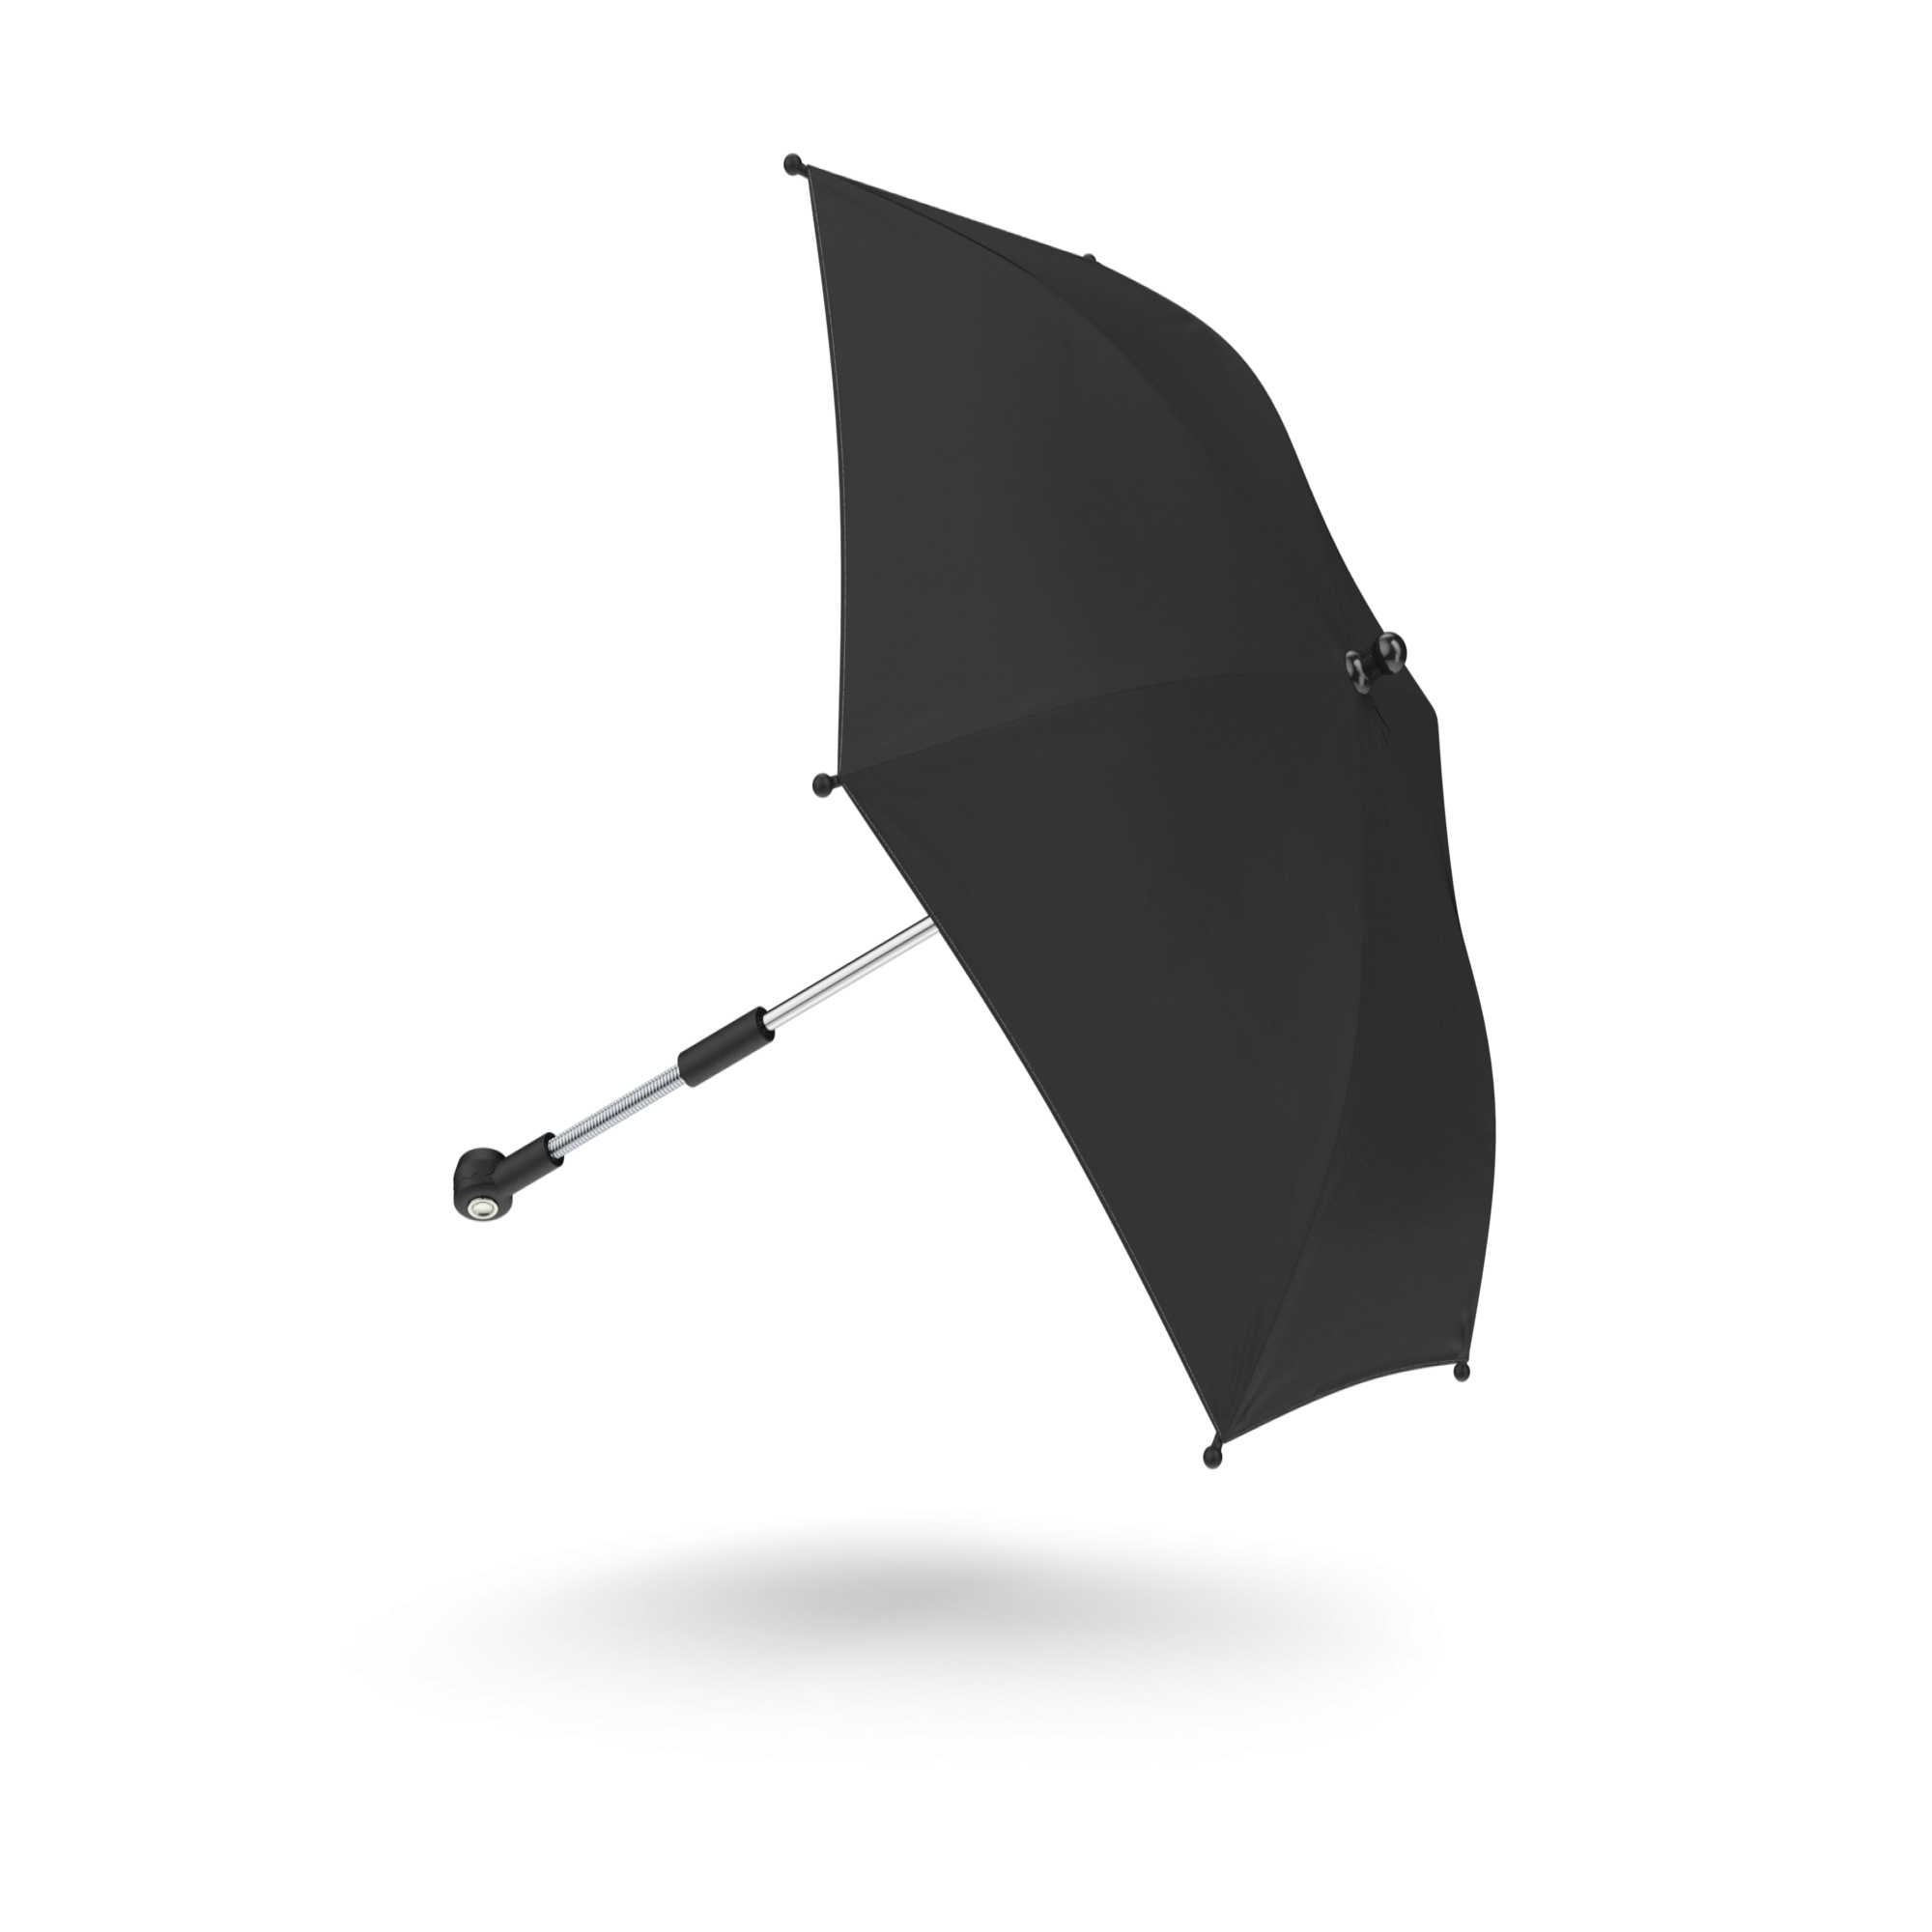 bugaboo buffalo parasol